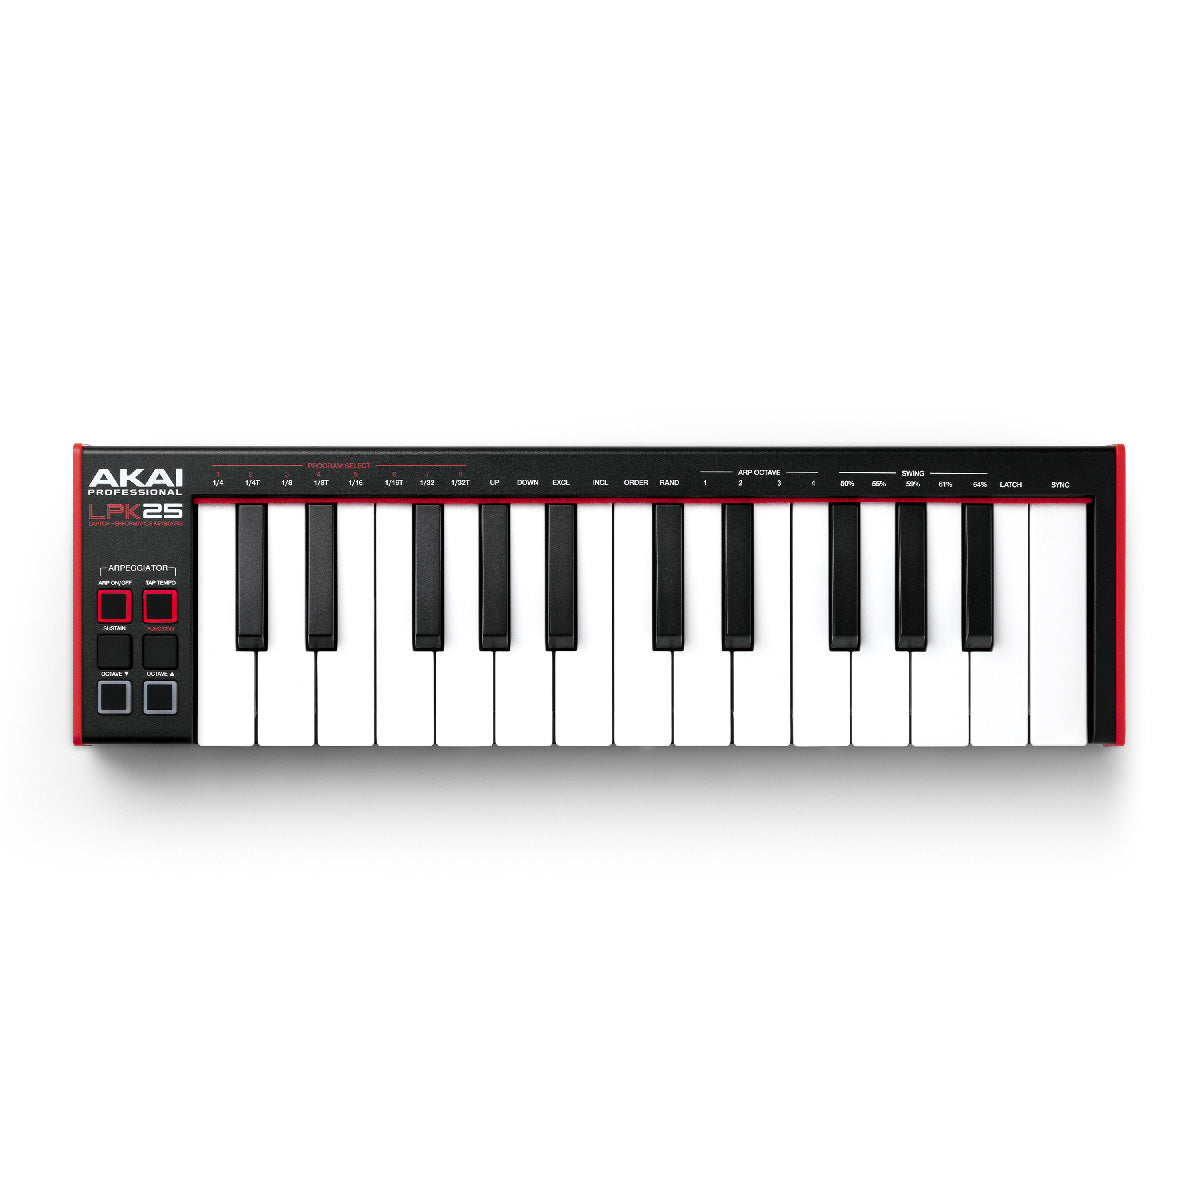 Akai LPK25 MK2 USB MIDI Keyboard Controller